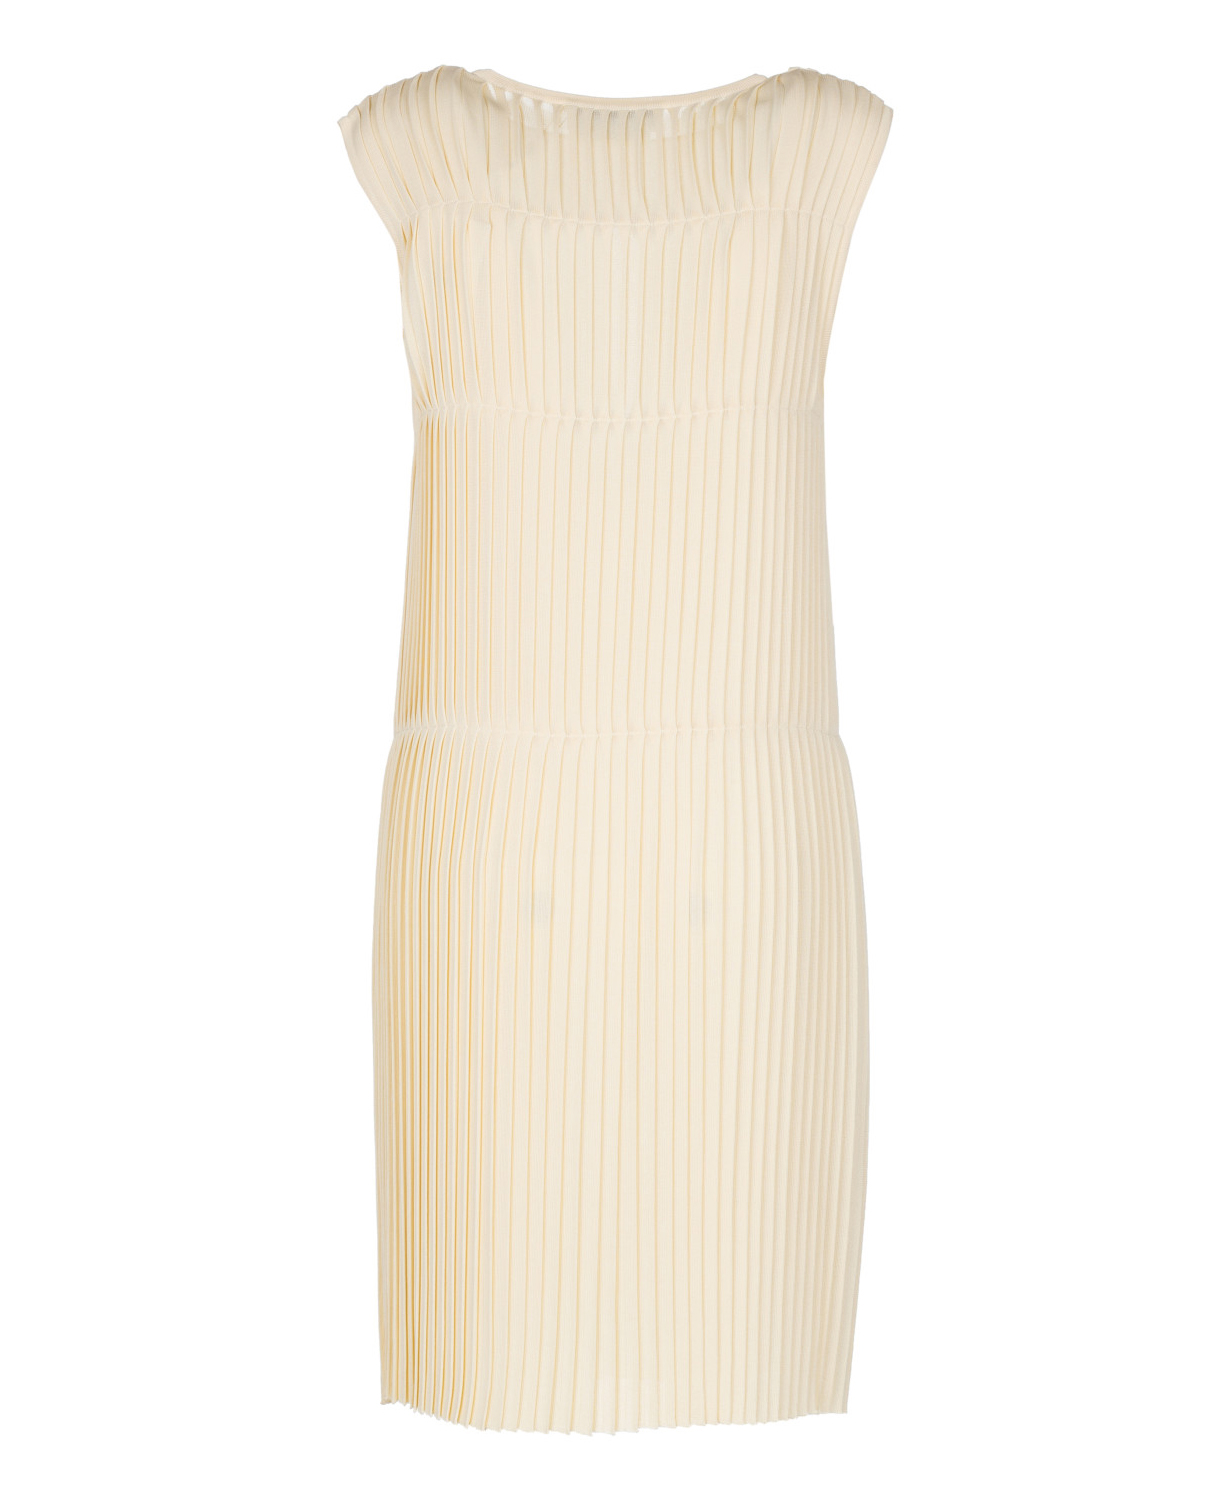 www.couturepoint.com-salvatore-ferragamo-womens-beige-sleeveless-pleated-dress